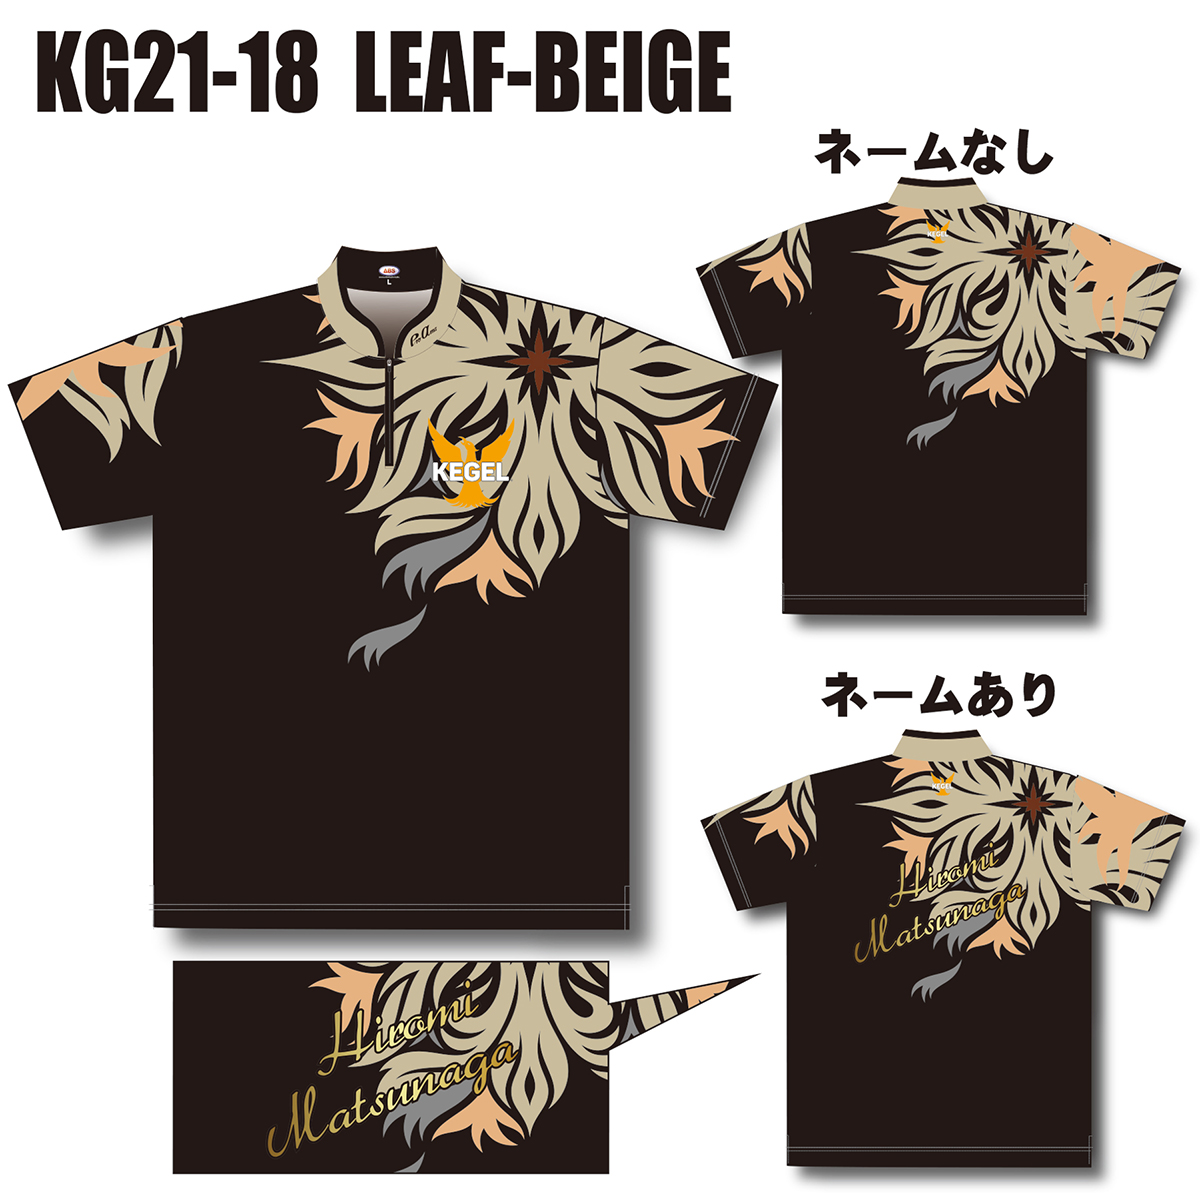 KEGEL KG21-18(LEAF-BEIGE)